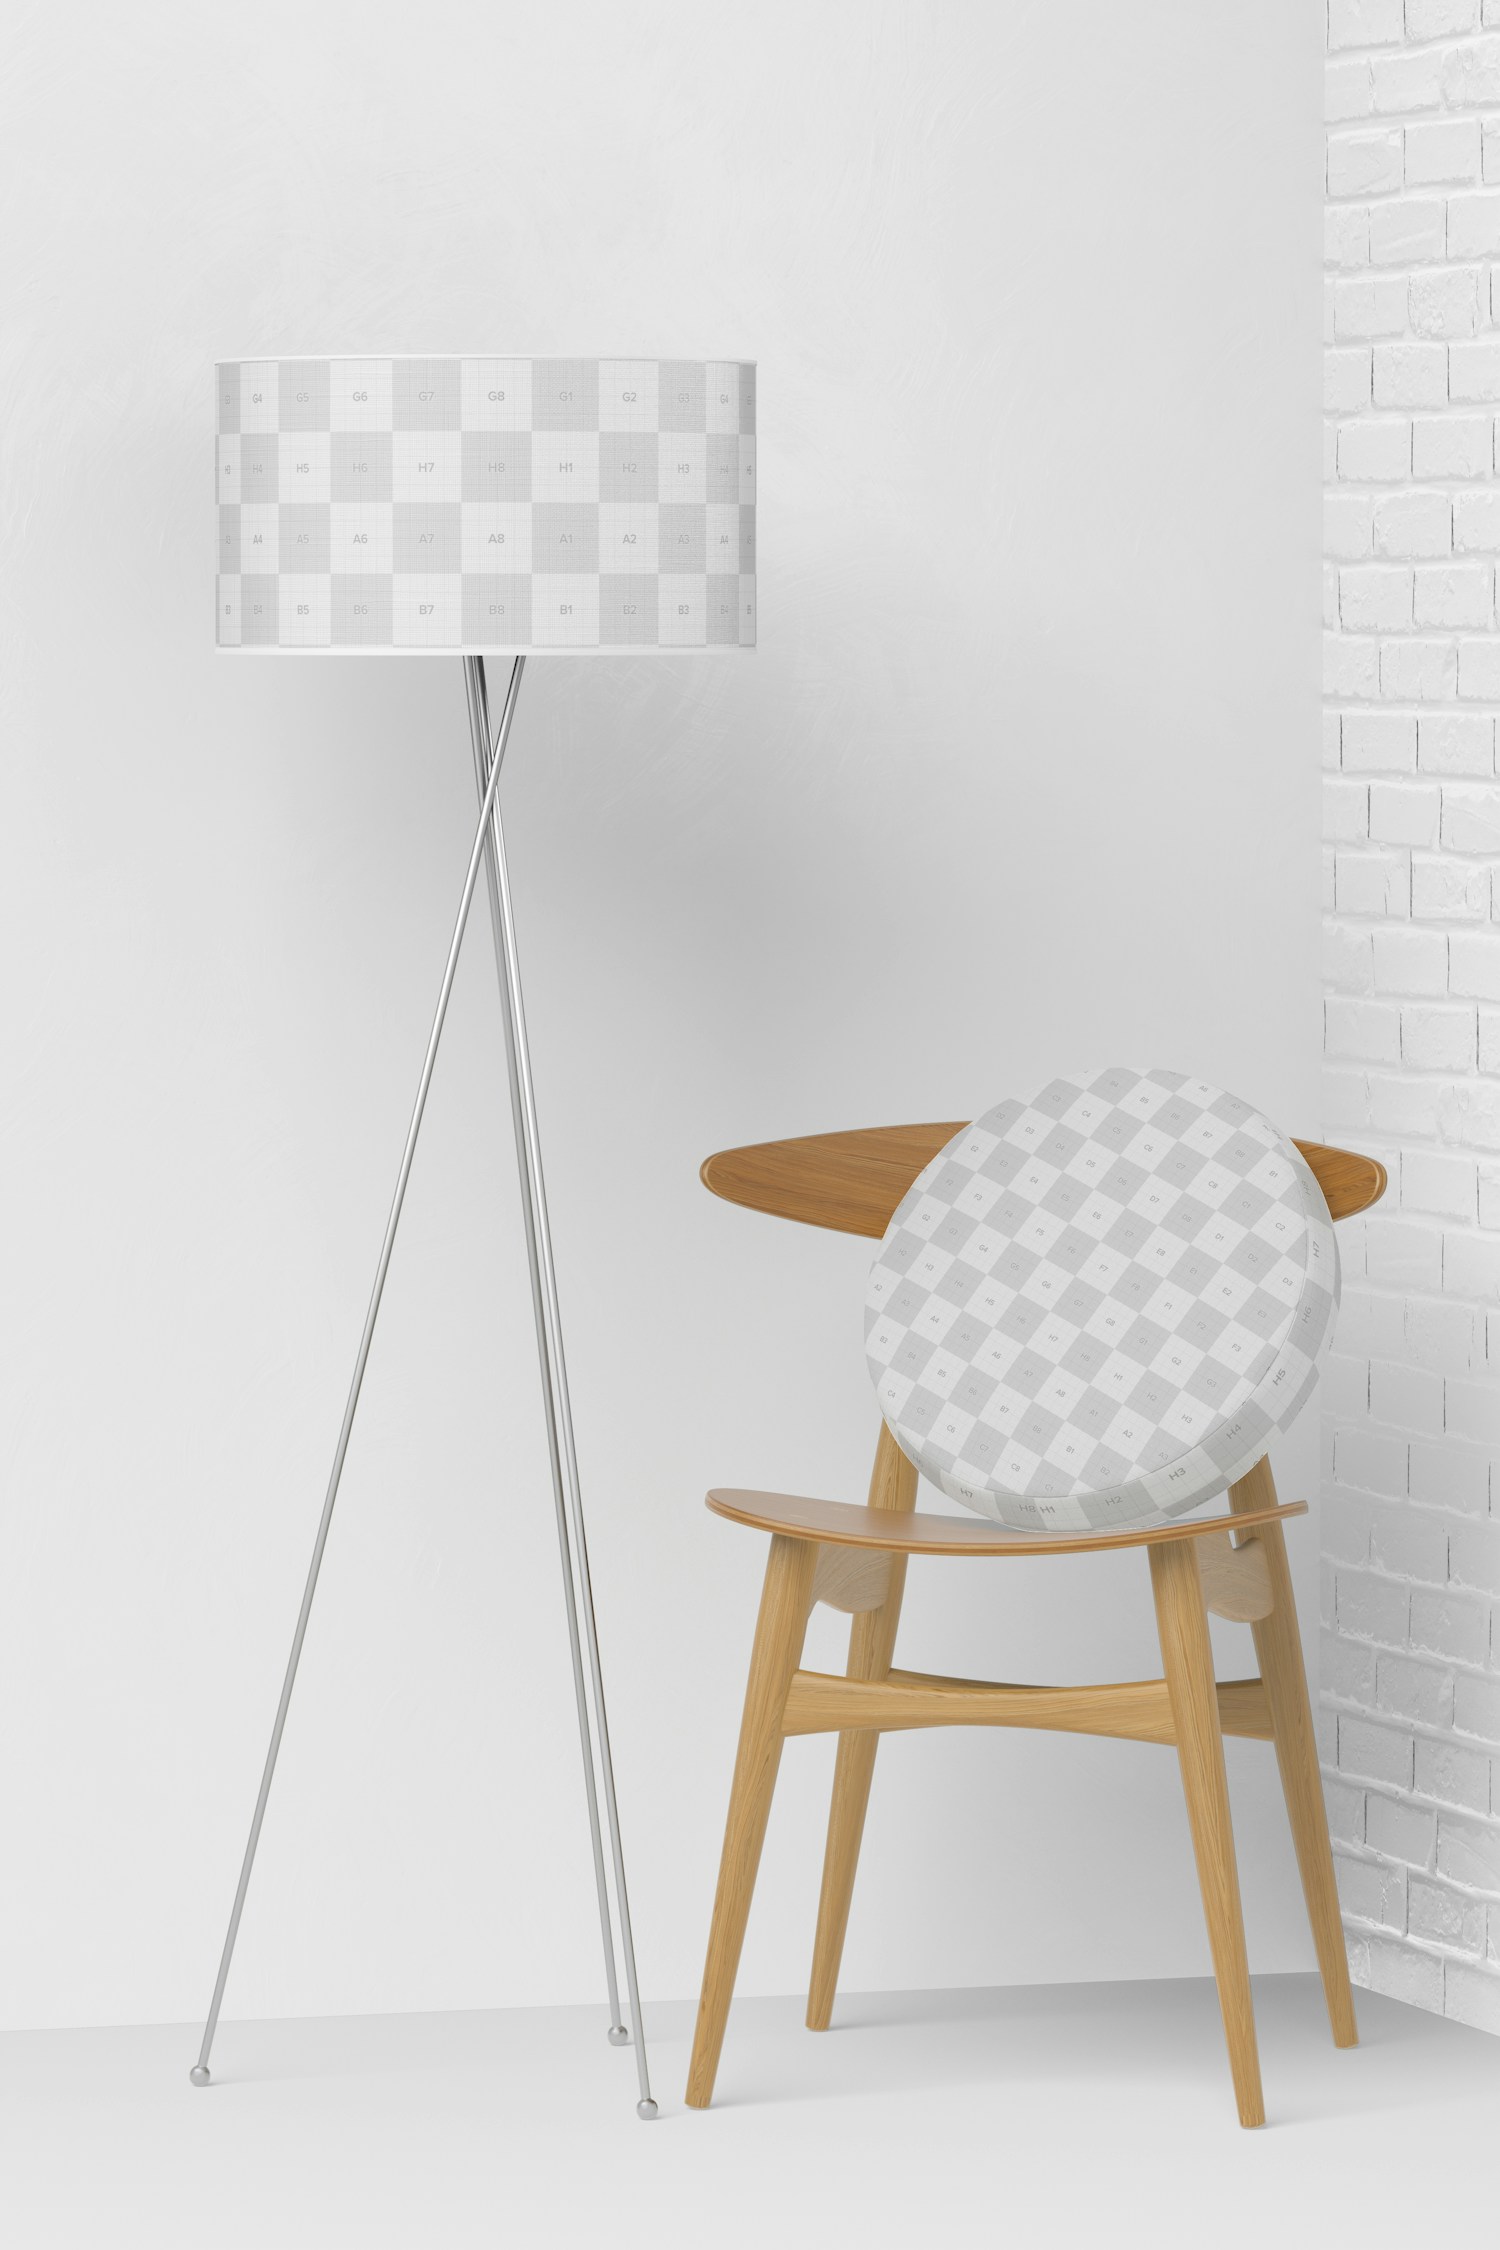 Tripod Floor Lamp with Chair Mockup